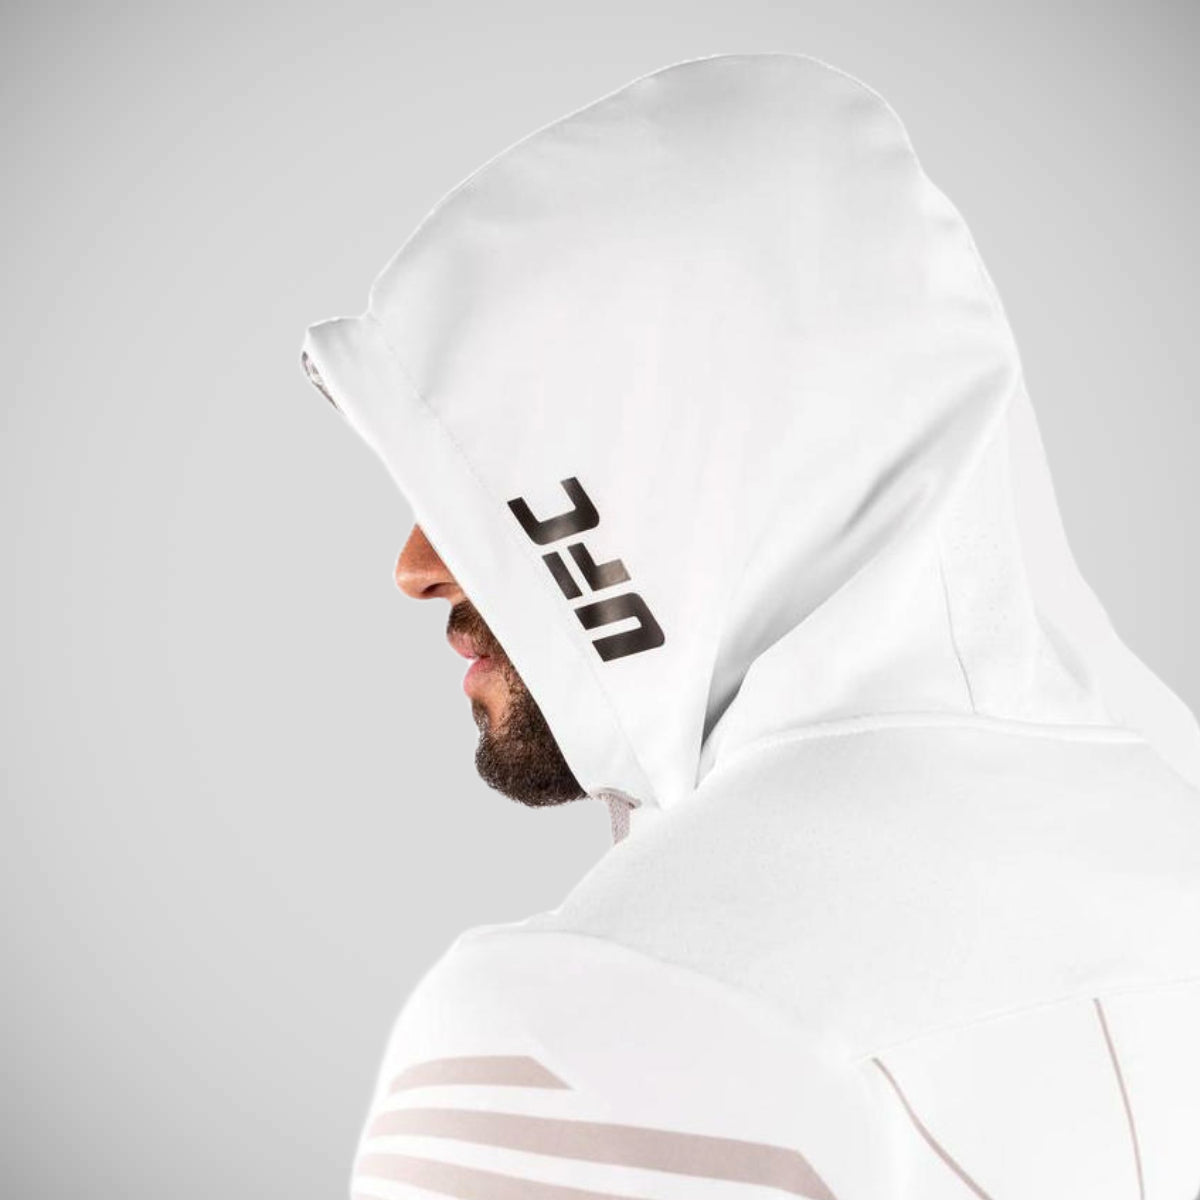 White Venum UFC Authentic Fight Night Walkout Zipped Hoodie   